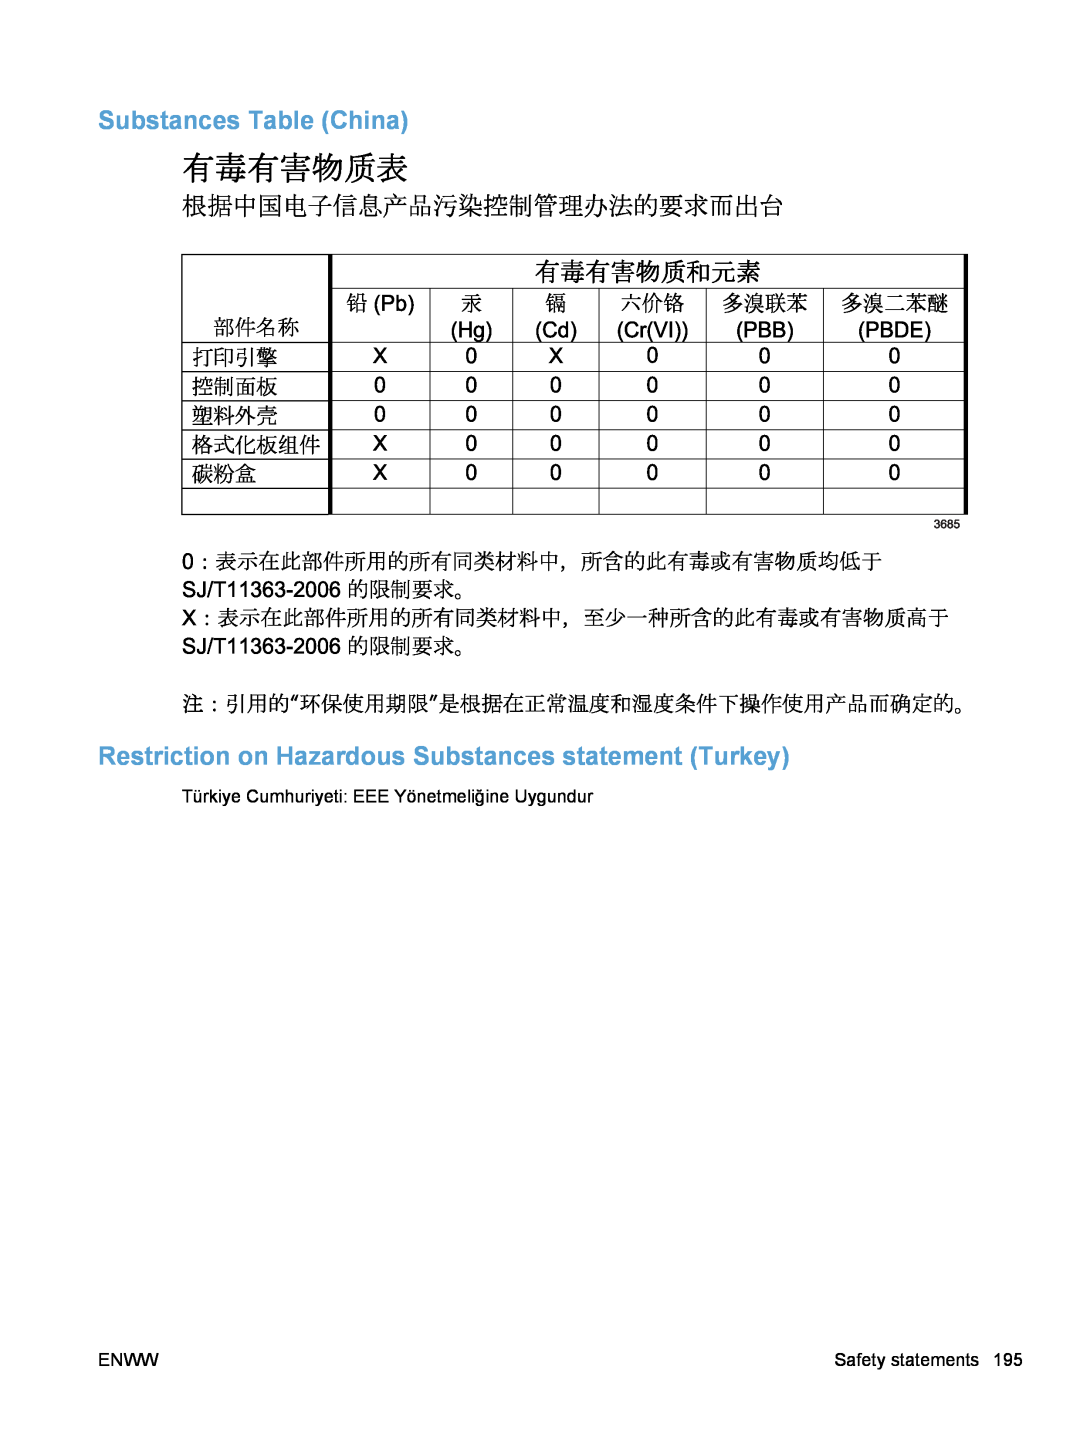 HP 100 CE866ARBGJ Substances Table China, Restriction on Hazardous Substances statement Turkey, Enww, Safety statements 